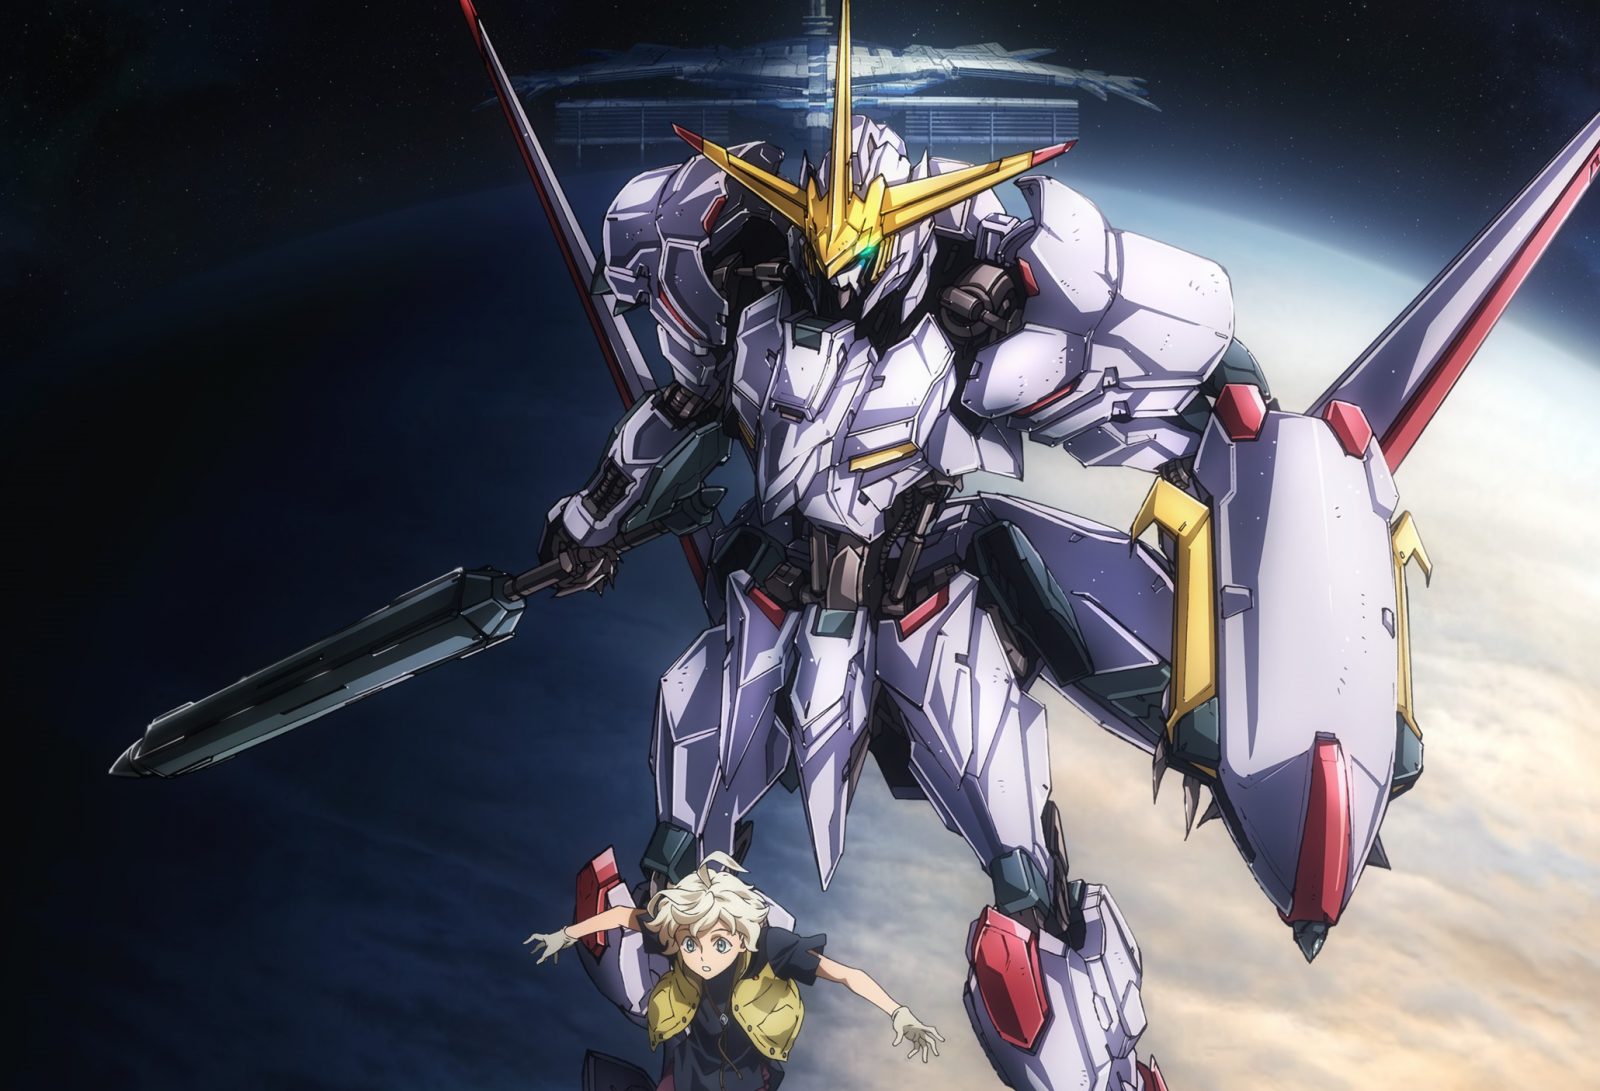 Bandai Namco Garap Game Mobile Suit Gundam: Iron-Blooded Orphans untuk Smar...